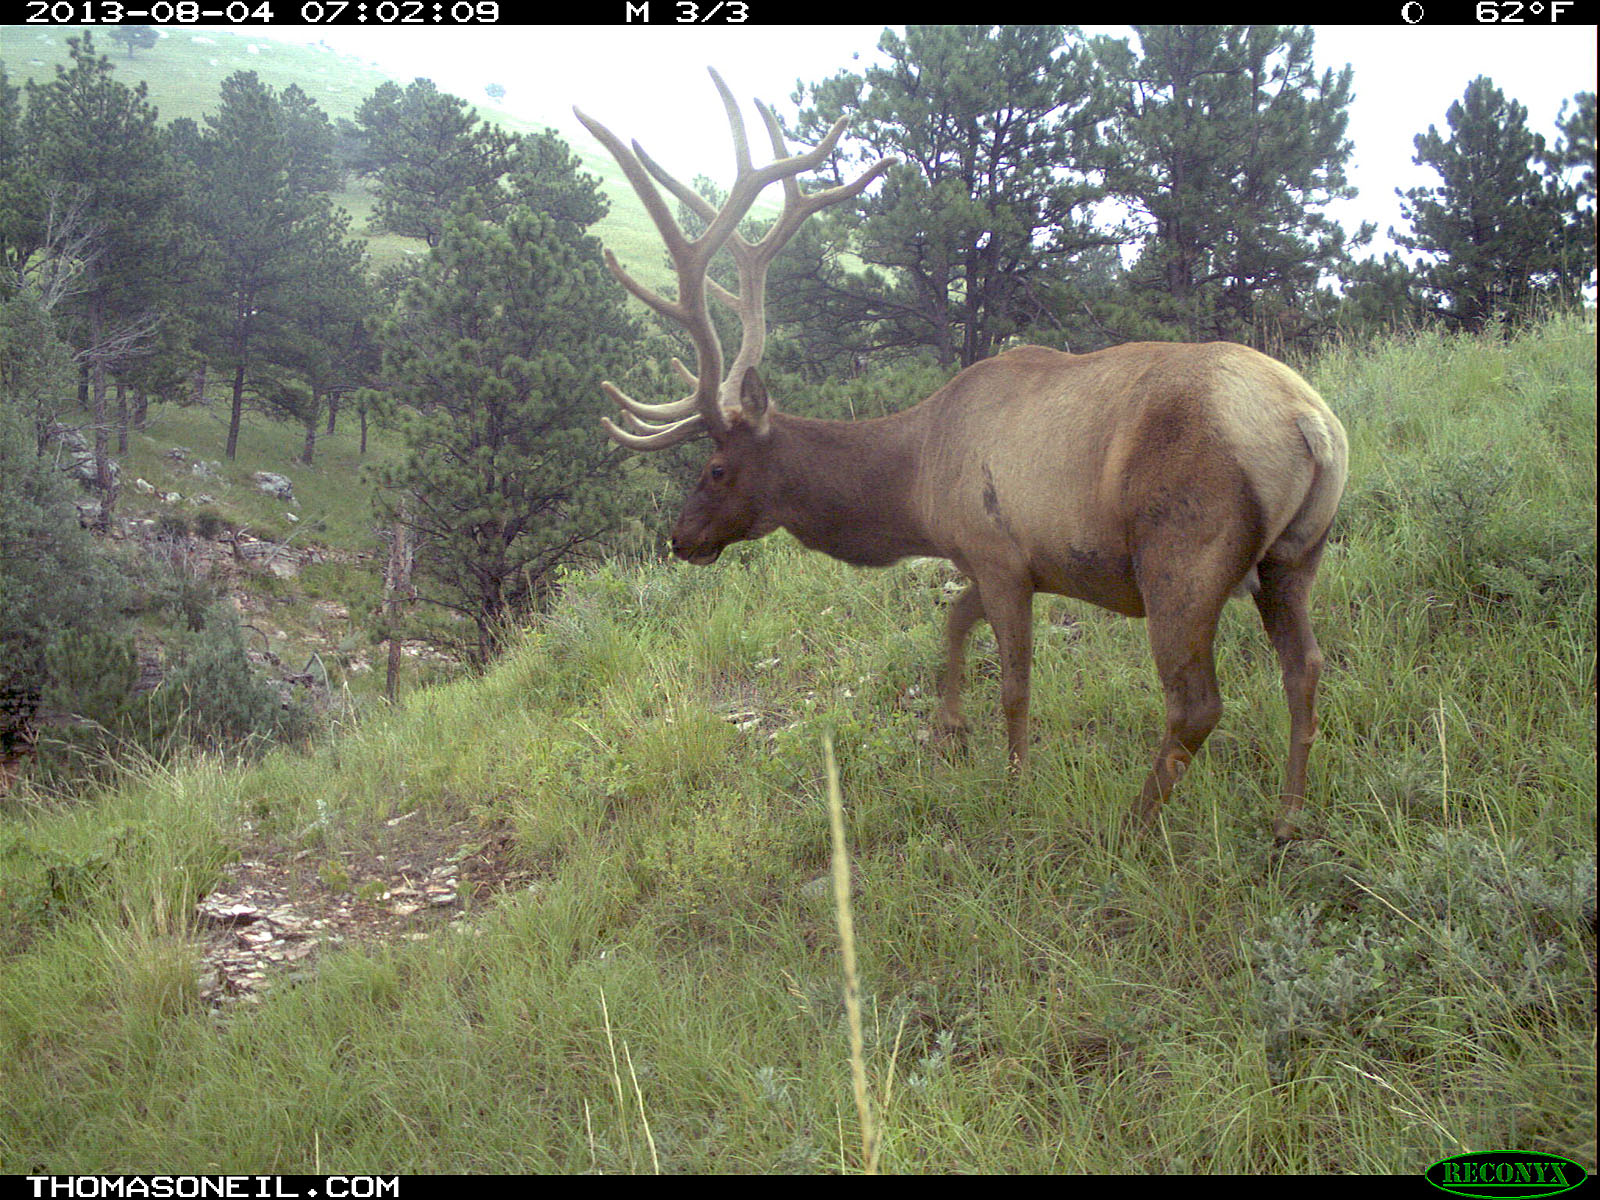 Elk on trail camera, Wind Cave National Park, South Dakota, August 8, 2013.